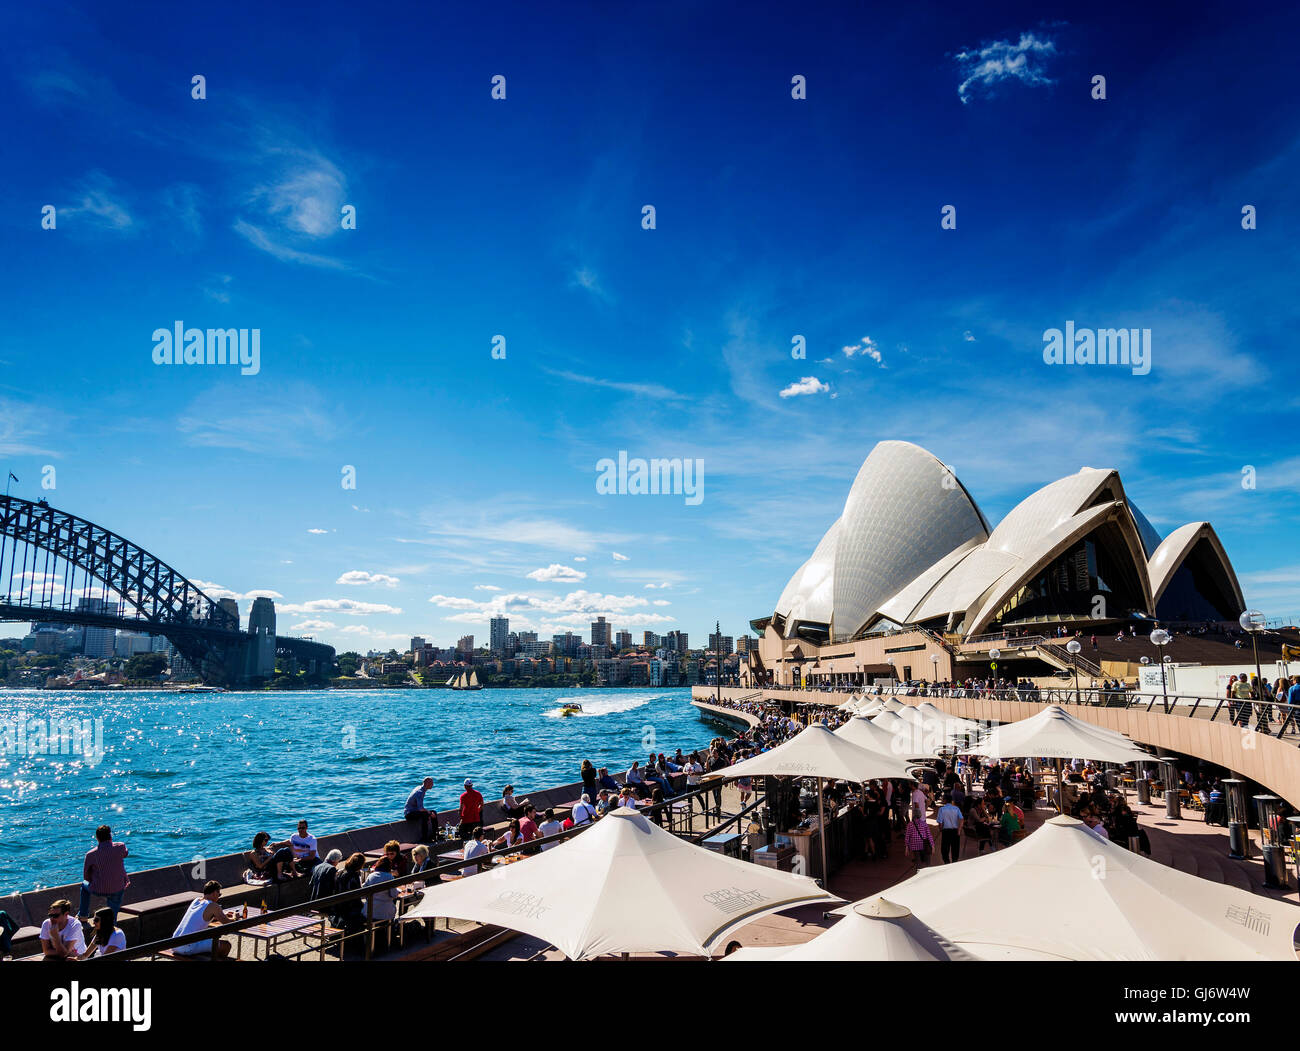 sydney opera house famous landmark and waterside cafe restaurant promenade in australia Stock Photo